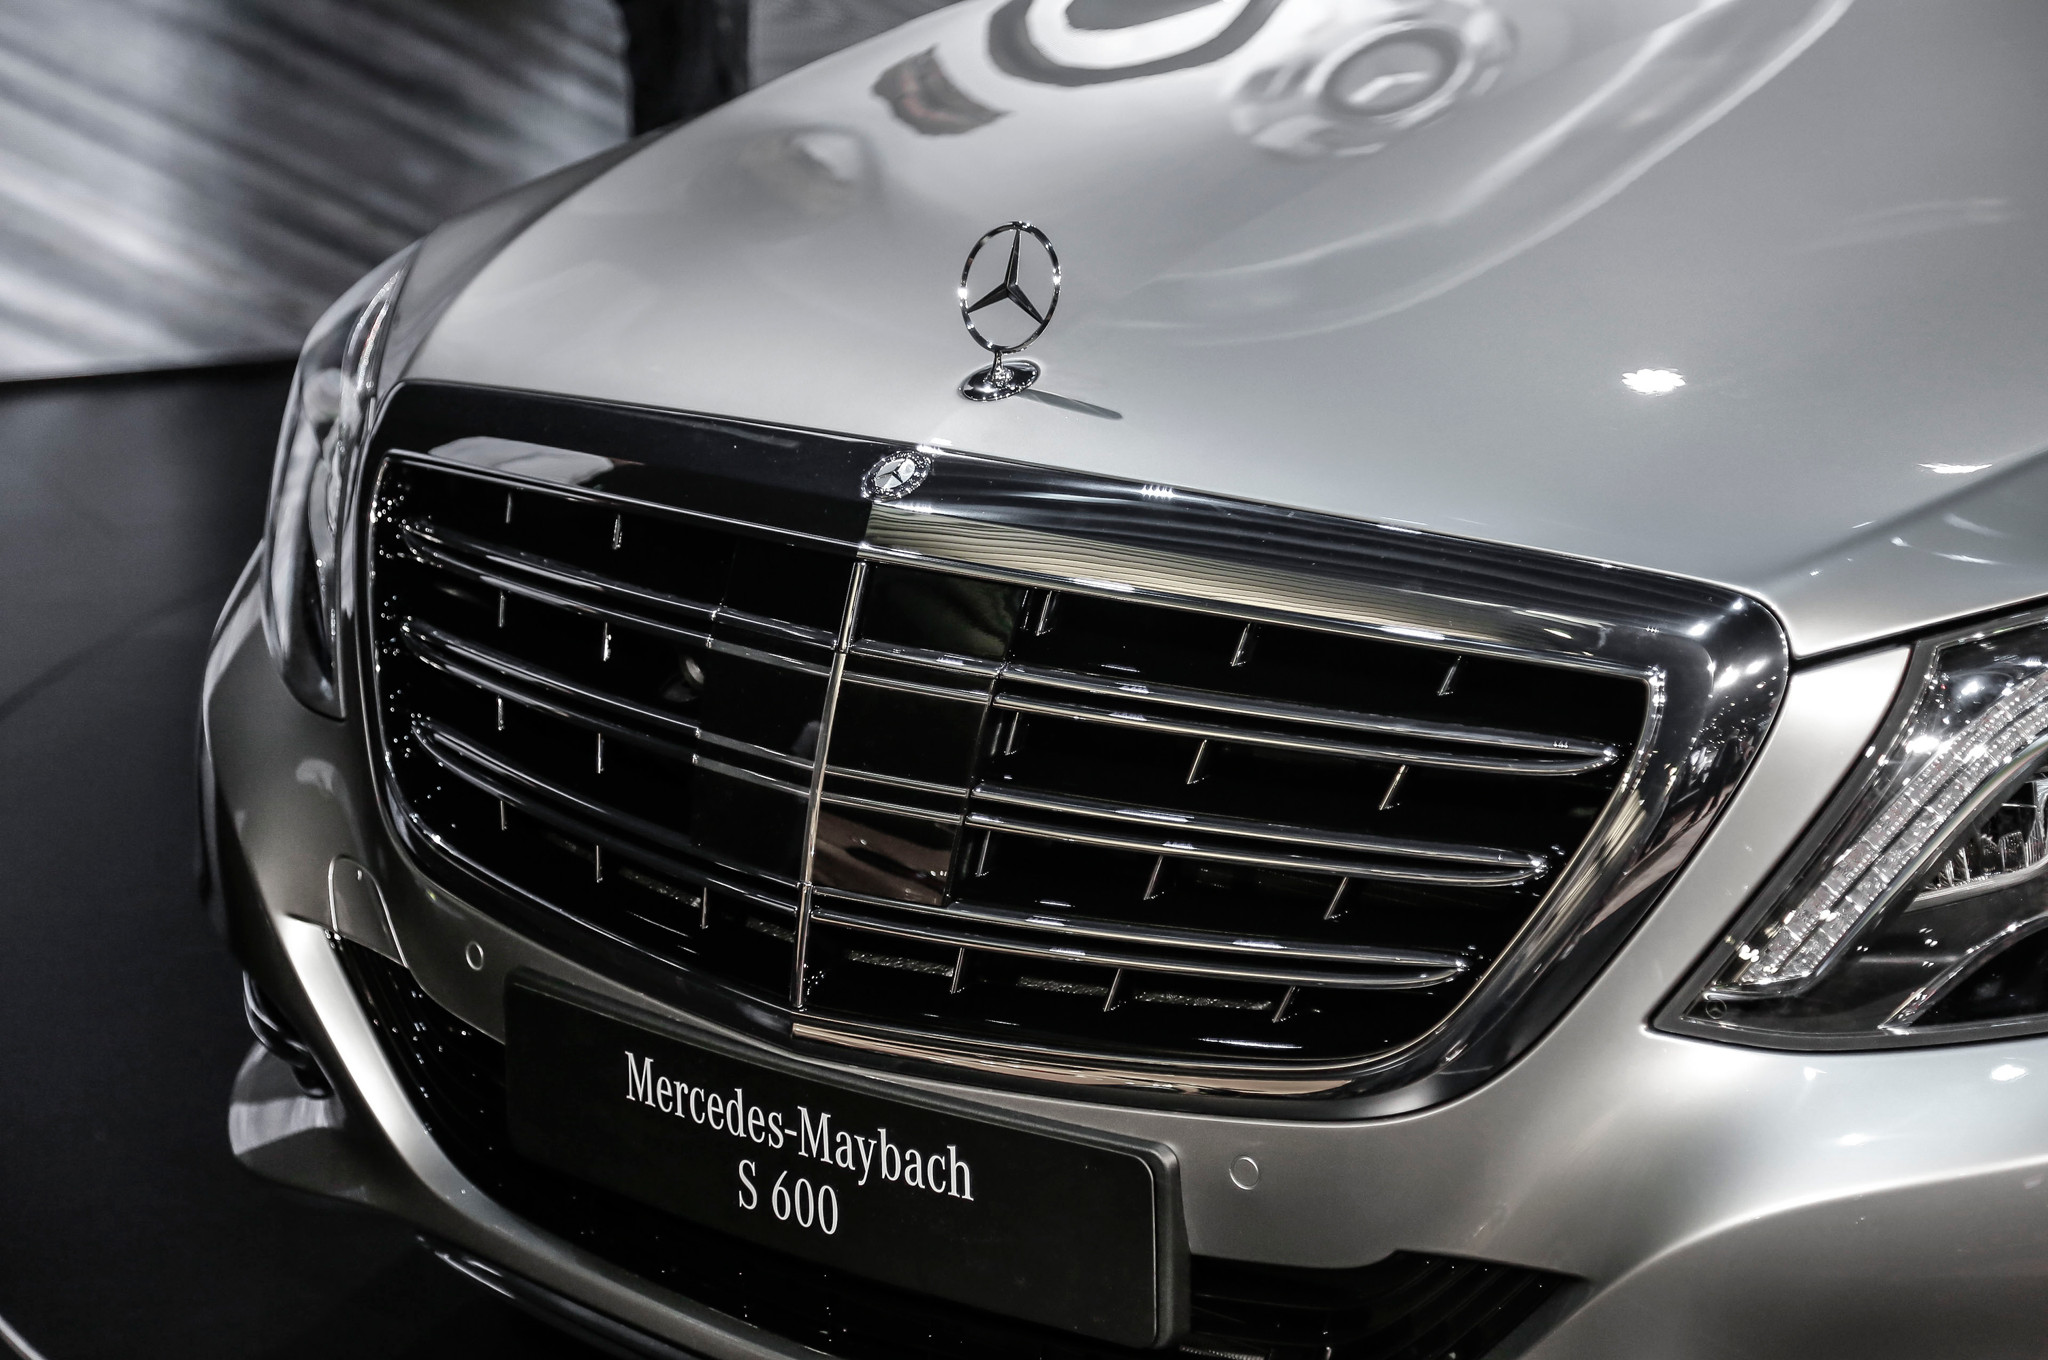 … Mercedes-Maybach S600 Symbol …